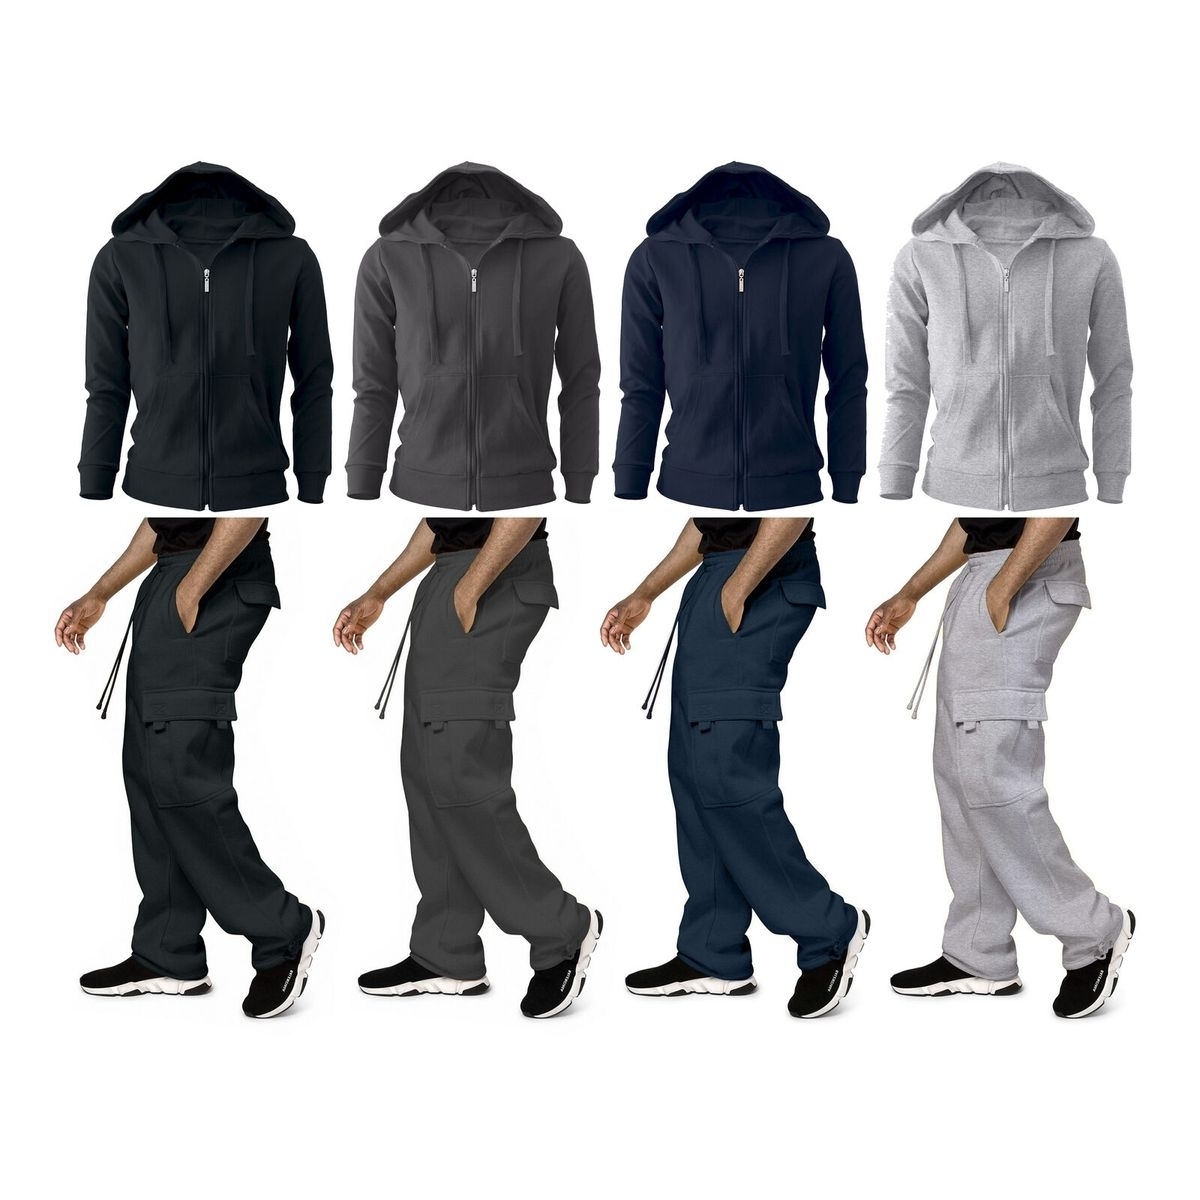 Men's Big & Tall Winter Warm Athletic Active Cozy Fleece Lined Multi-Pocket Full Zip Up Cargo Tracksuit - Black, 3xl